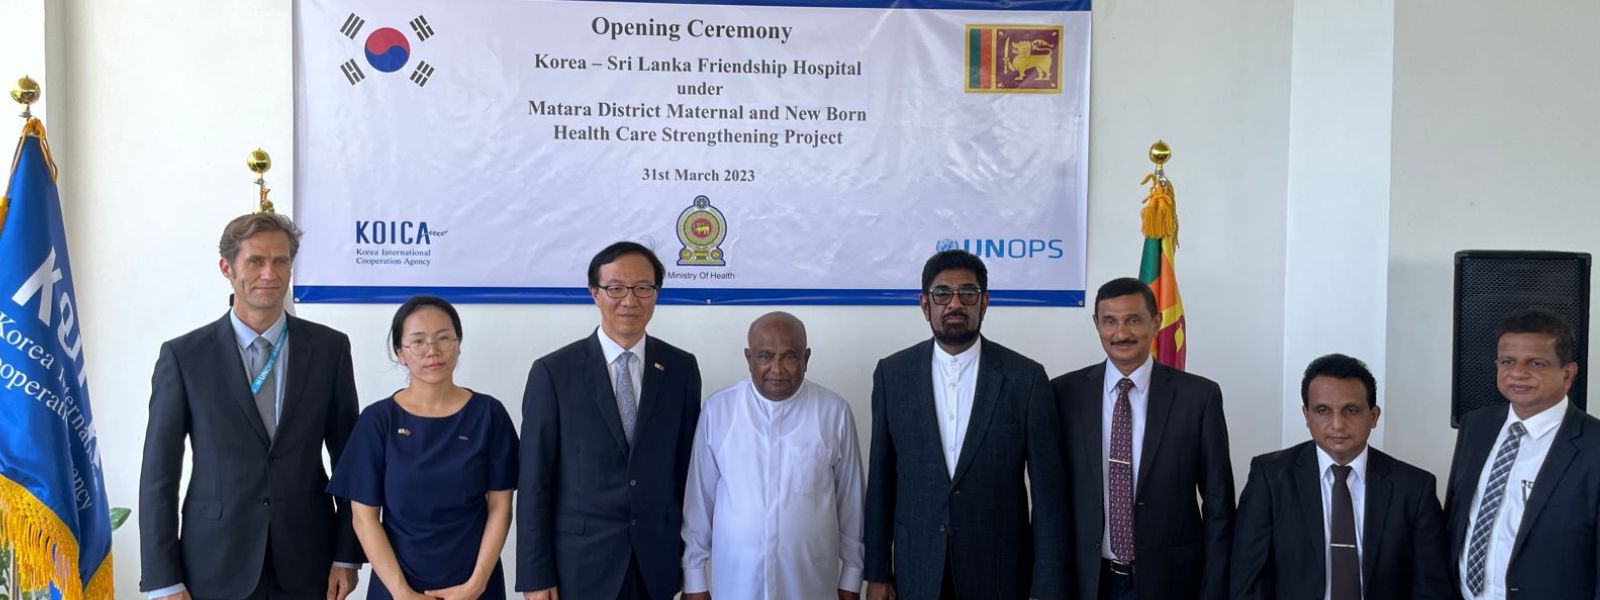 Korea Sri Lanka Friendship Hospital opens in Matara